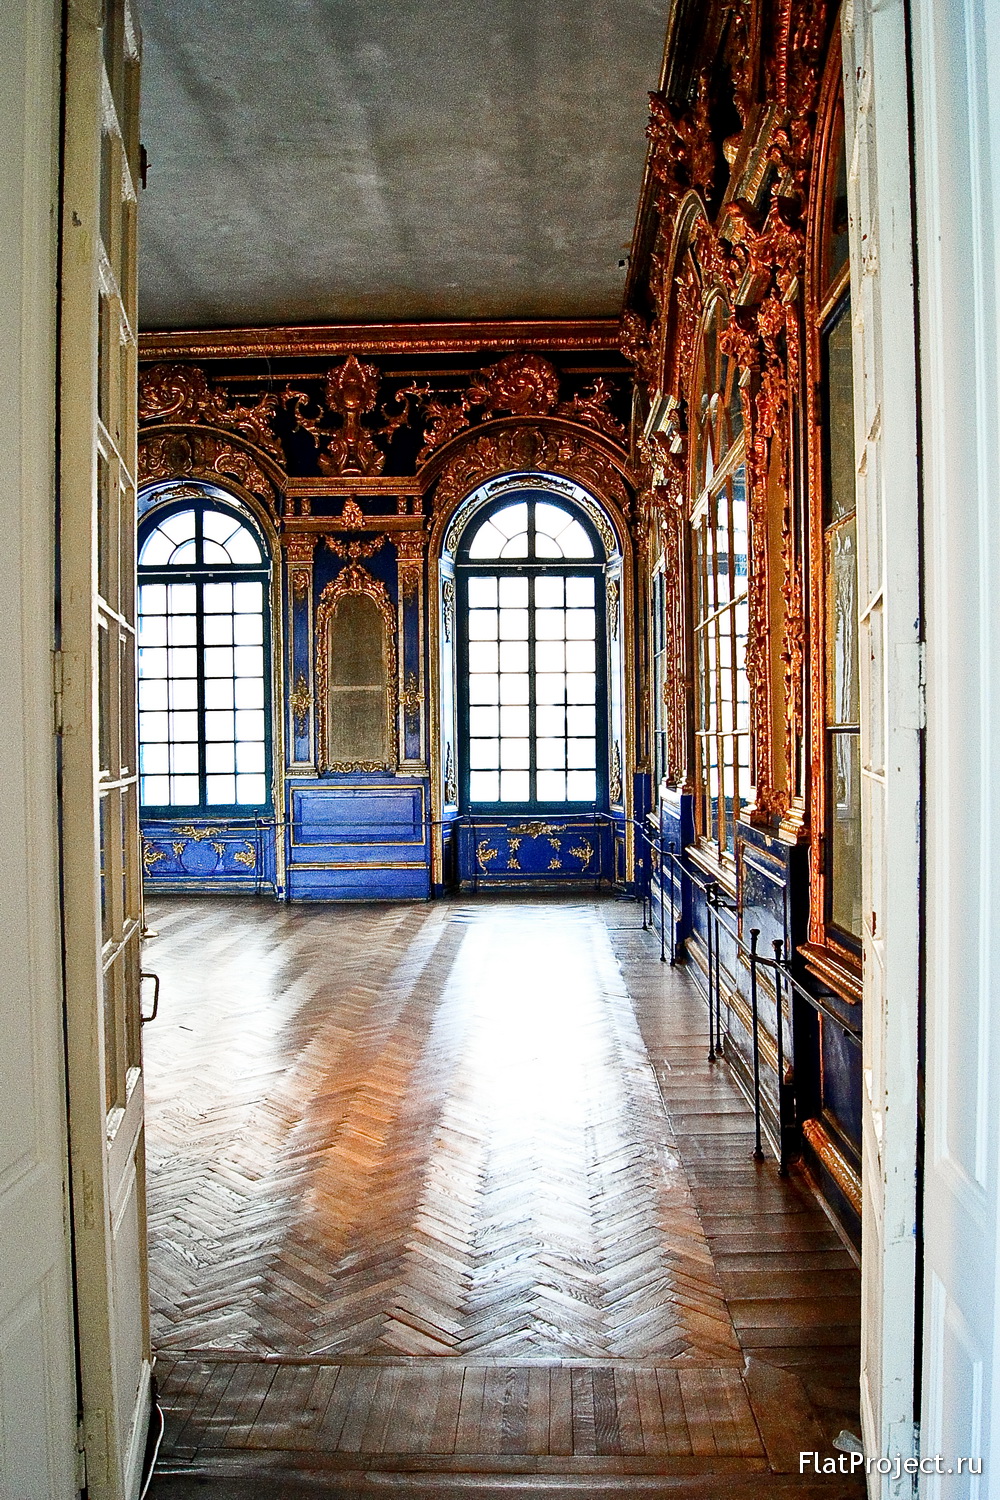 The Catherine Palace interiors – photo 50